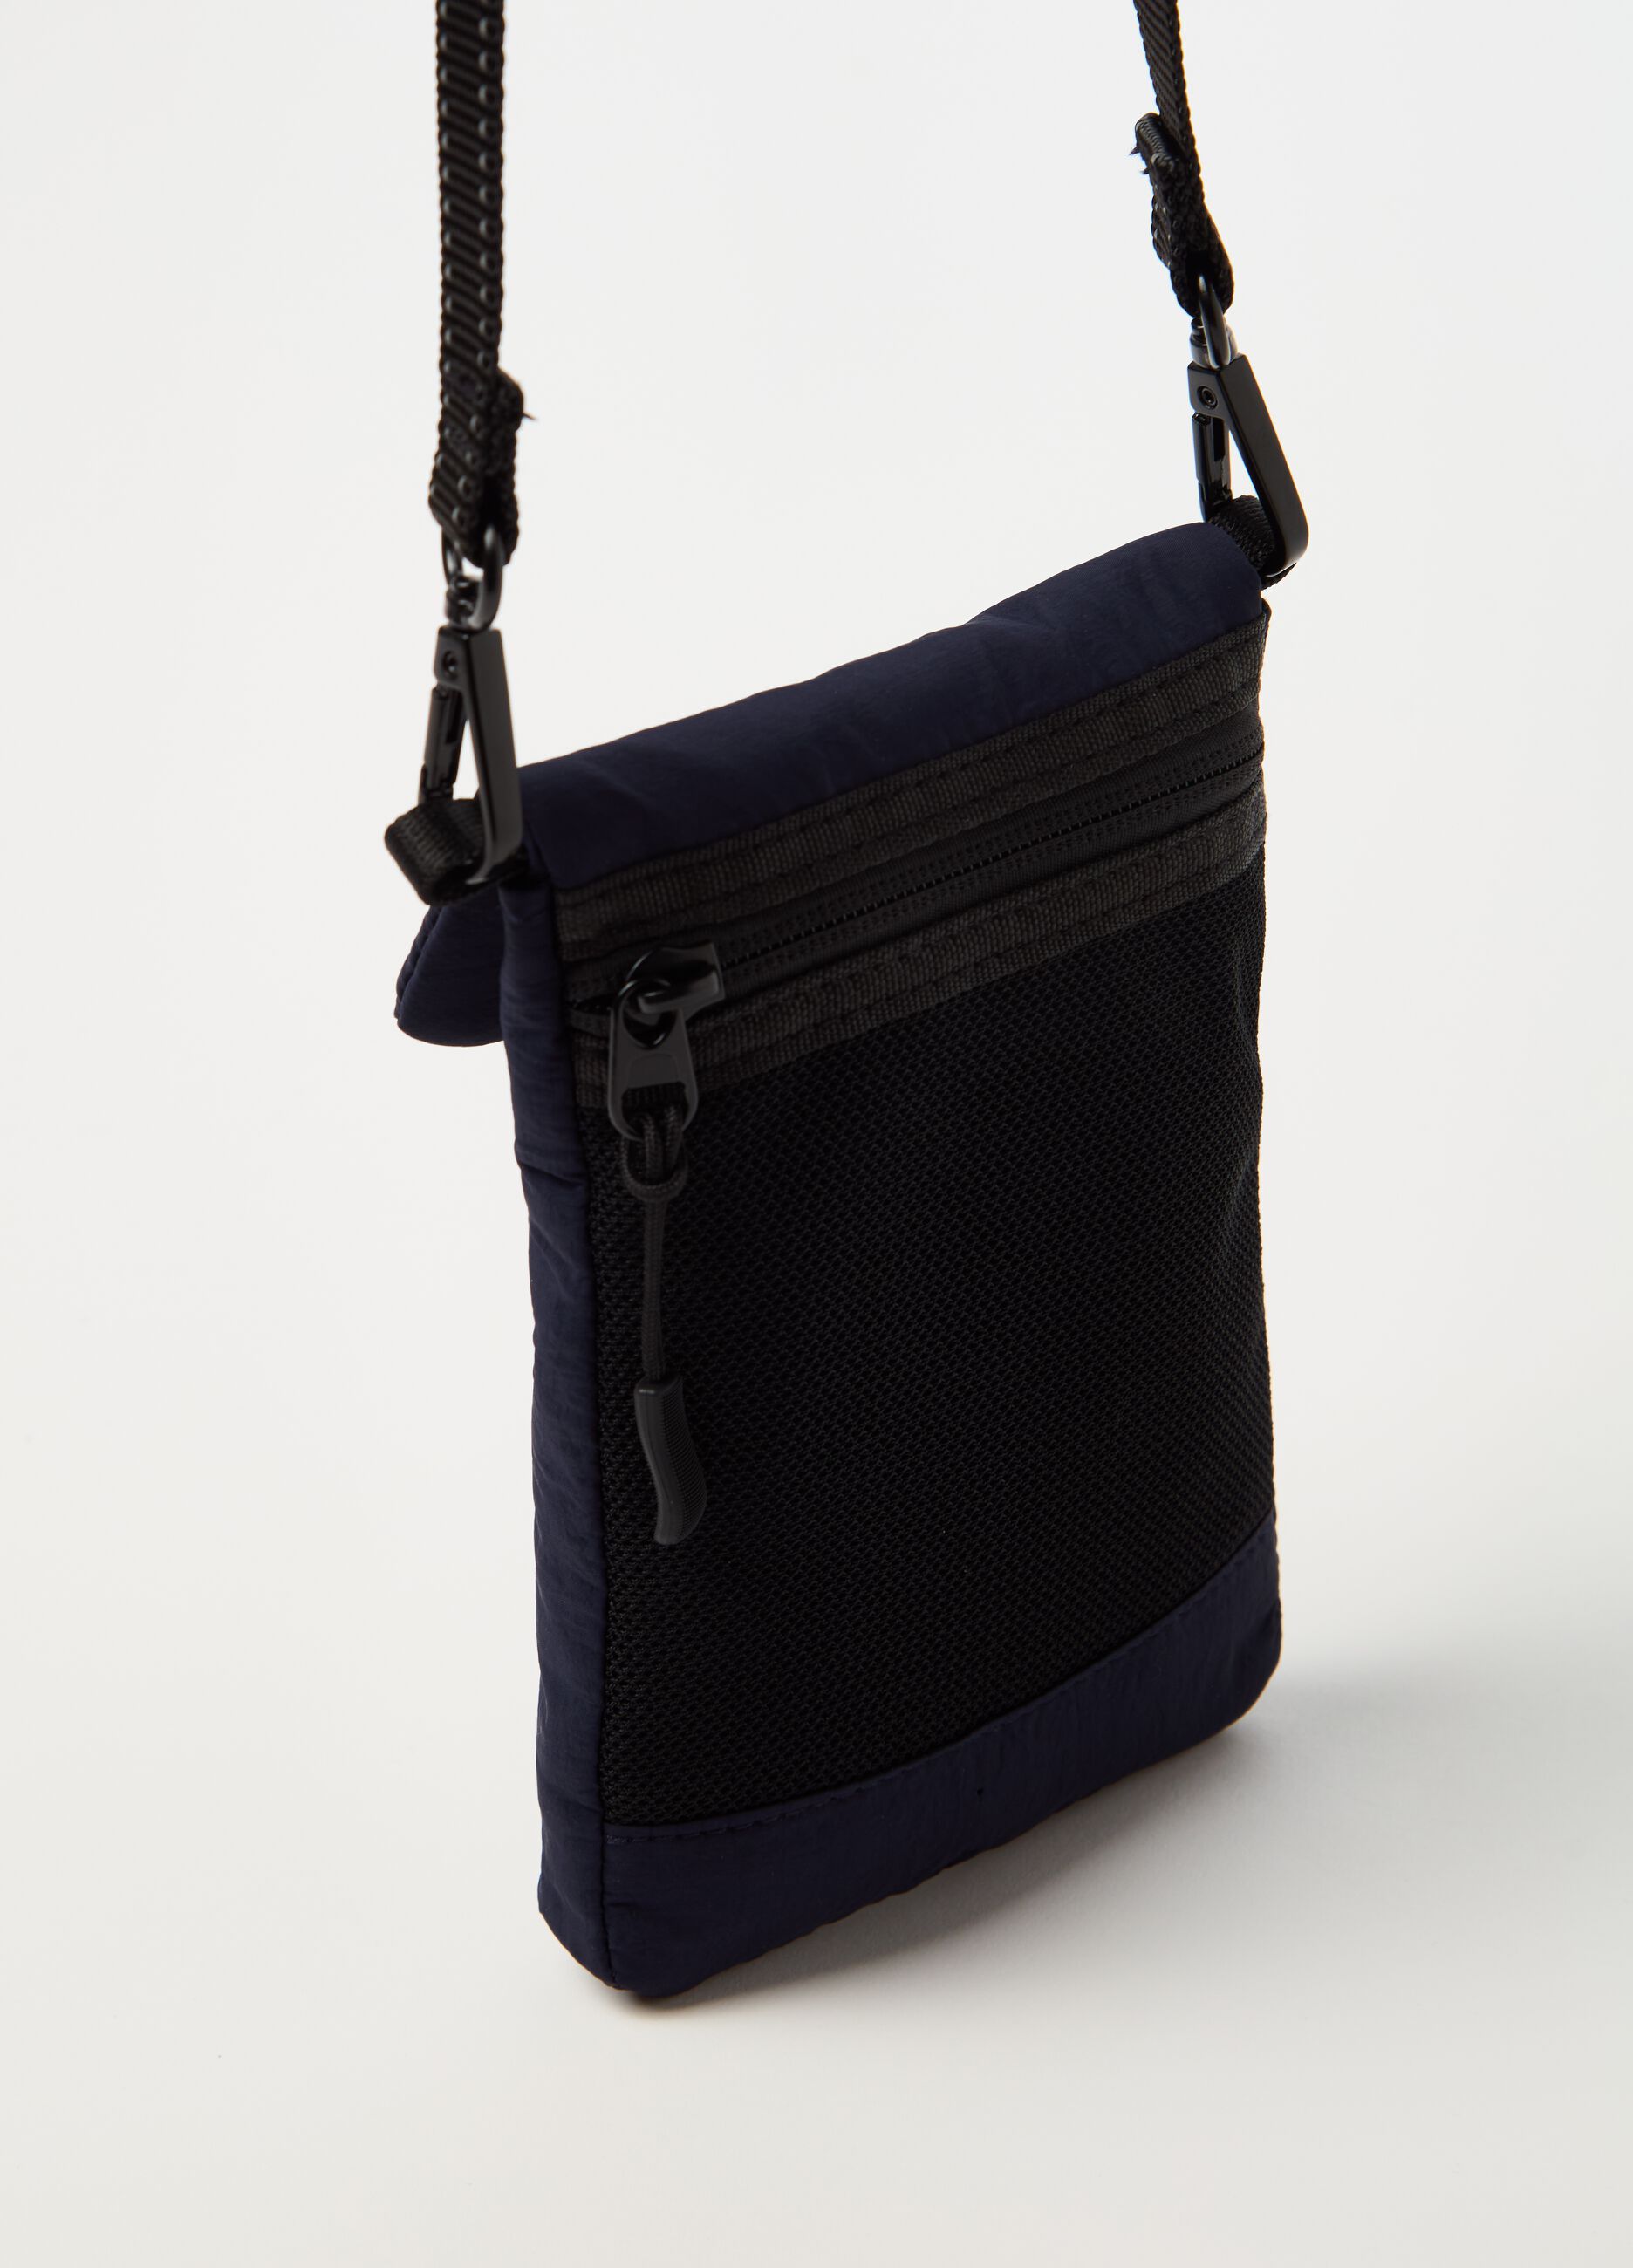 Mobile phone case with shoulder strap